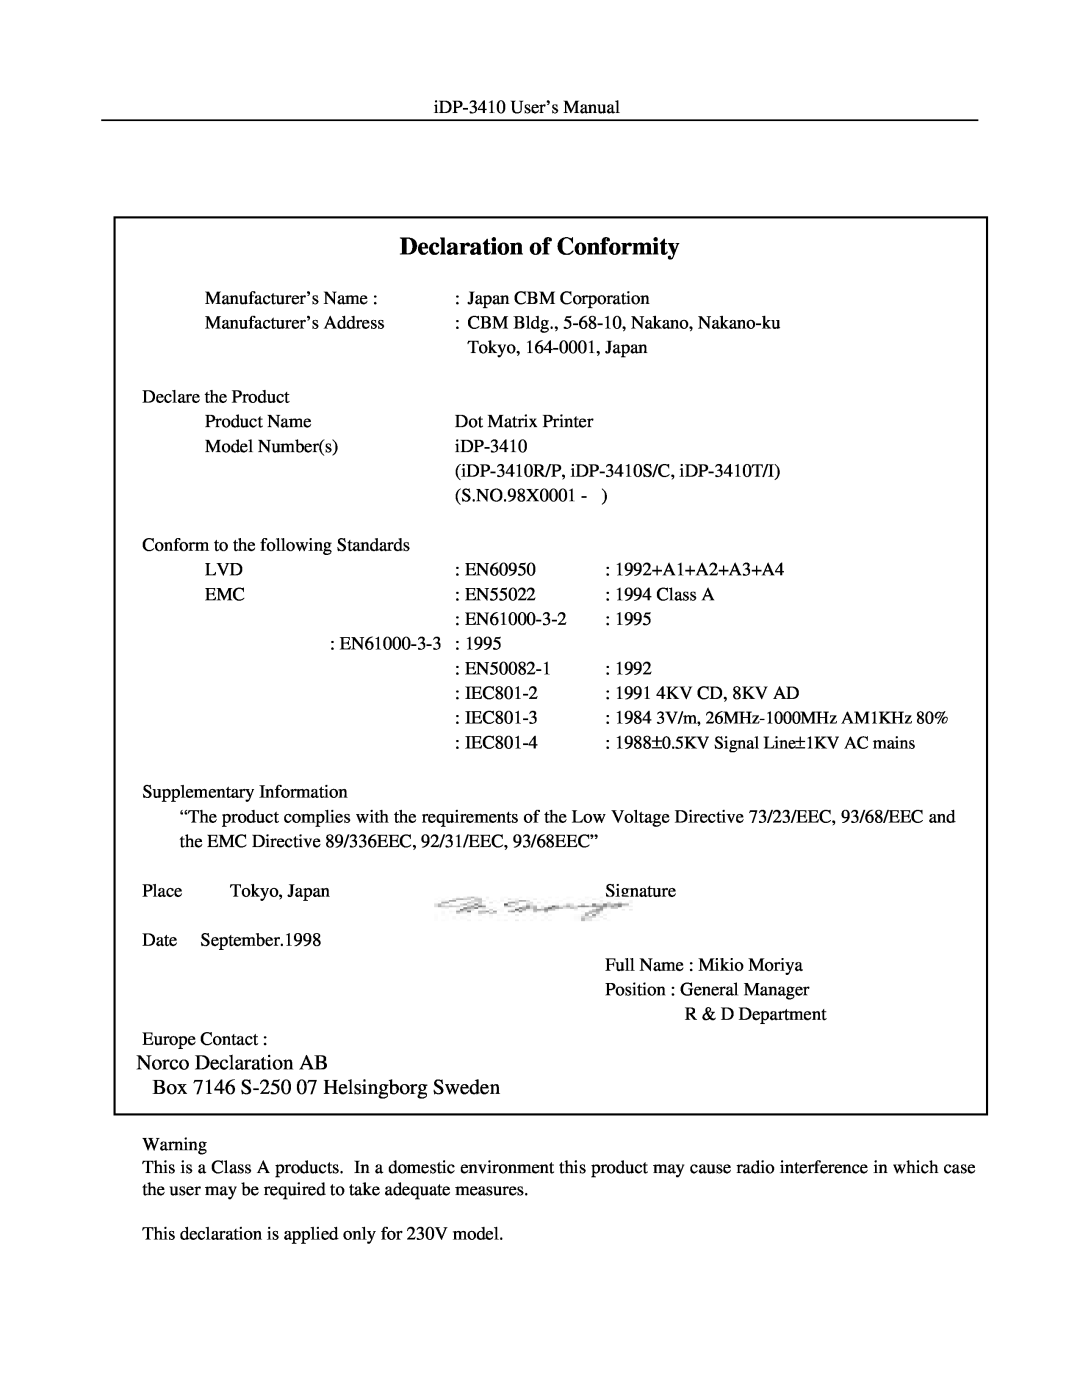 Addlogix iDP-3410 user manual Declaration of Conformity, Norco Declaration AB Box 7146 S-250 07 Helsingborg Sweden 